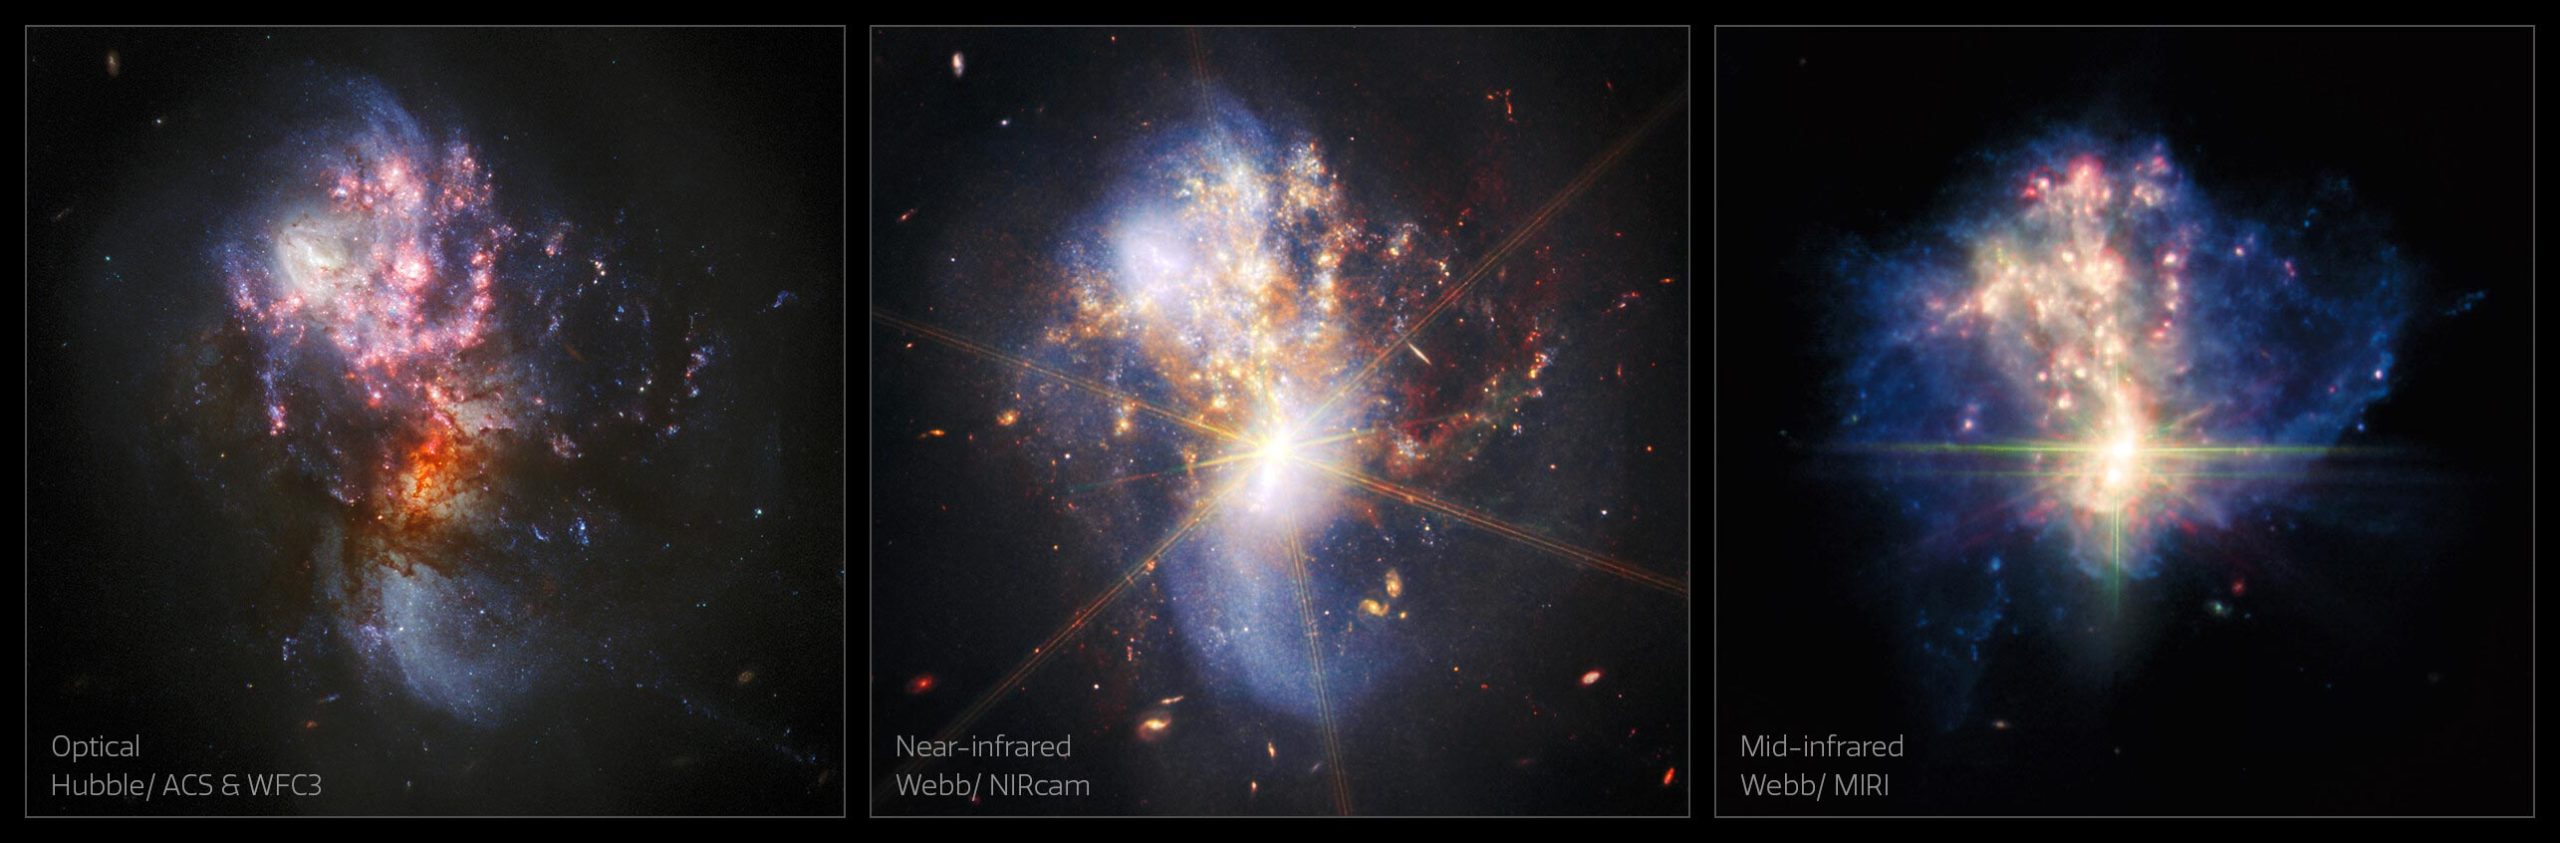 Webb captures ‘unprecedented’ image of galaxies merging near supermassive black hole